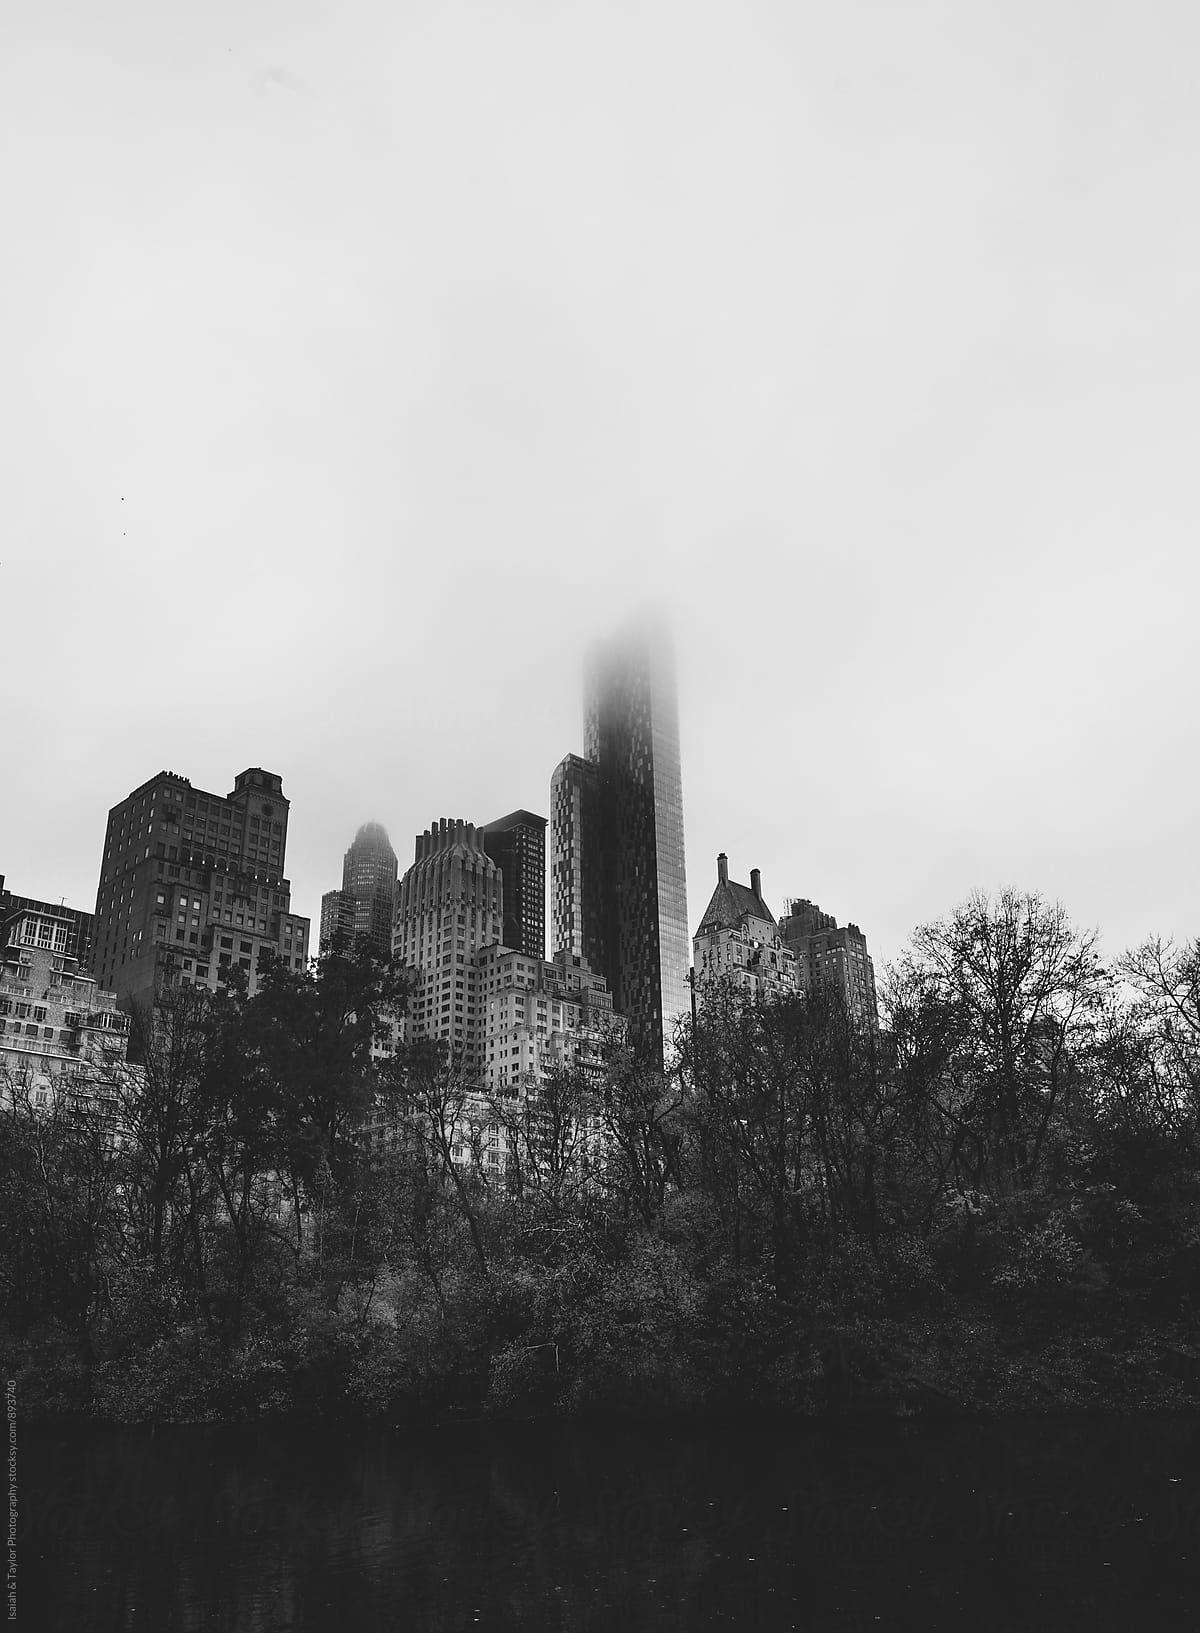 Foggy city over trees